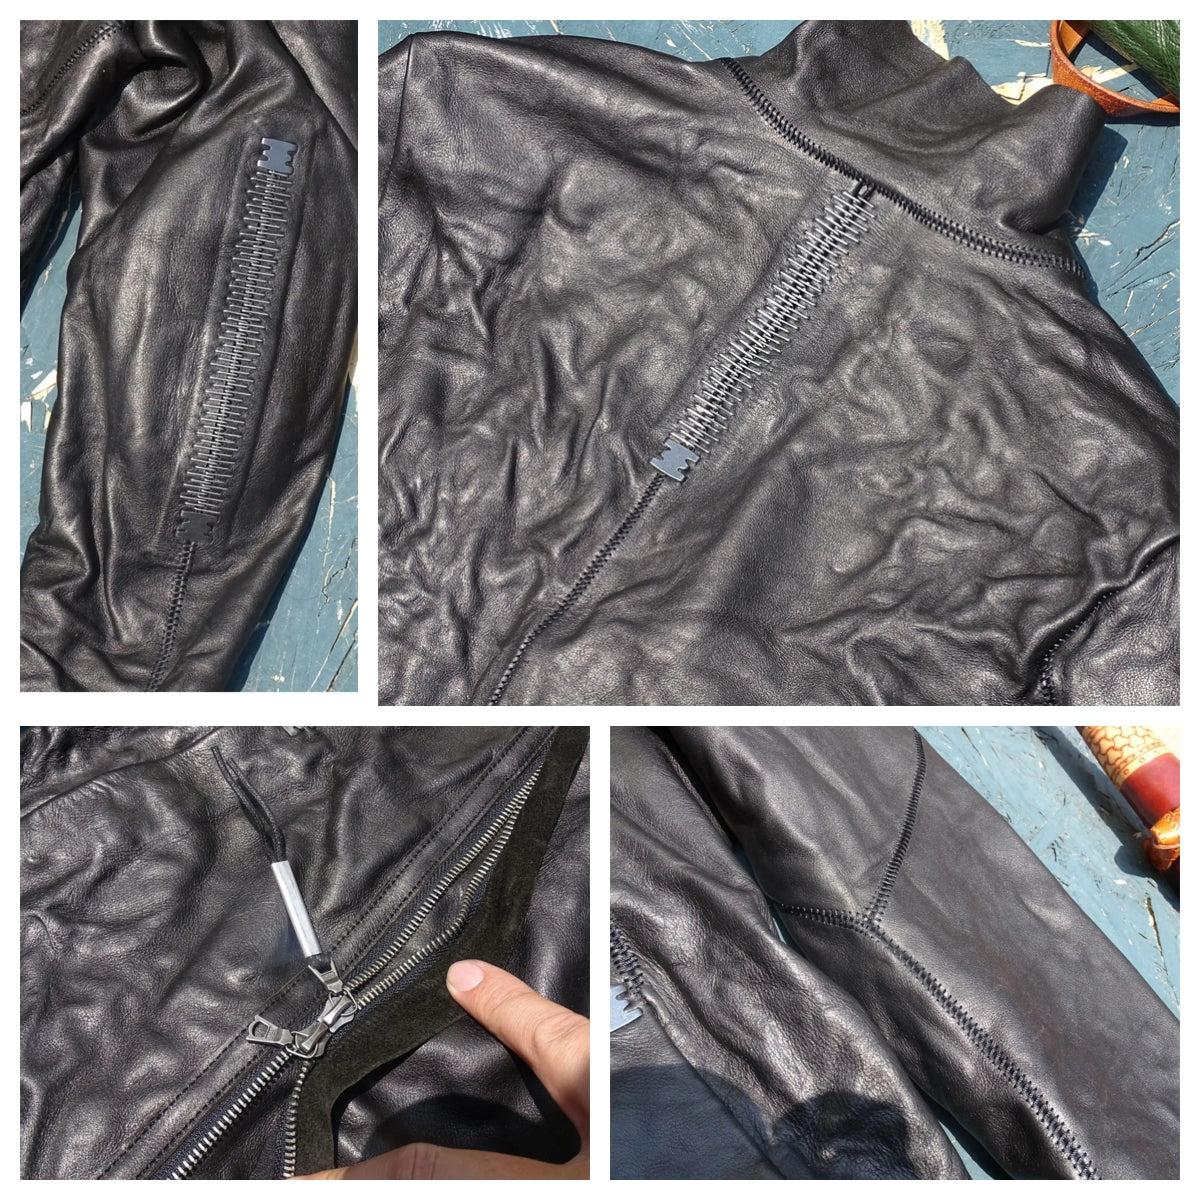 Men's Asymmetrical Crinkled Leather Jacket